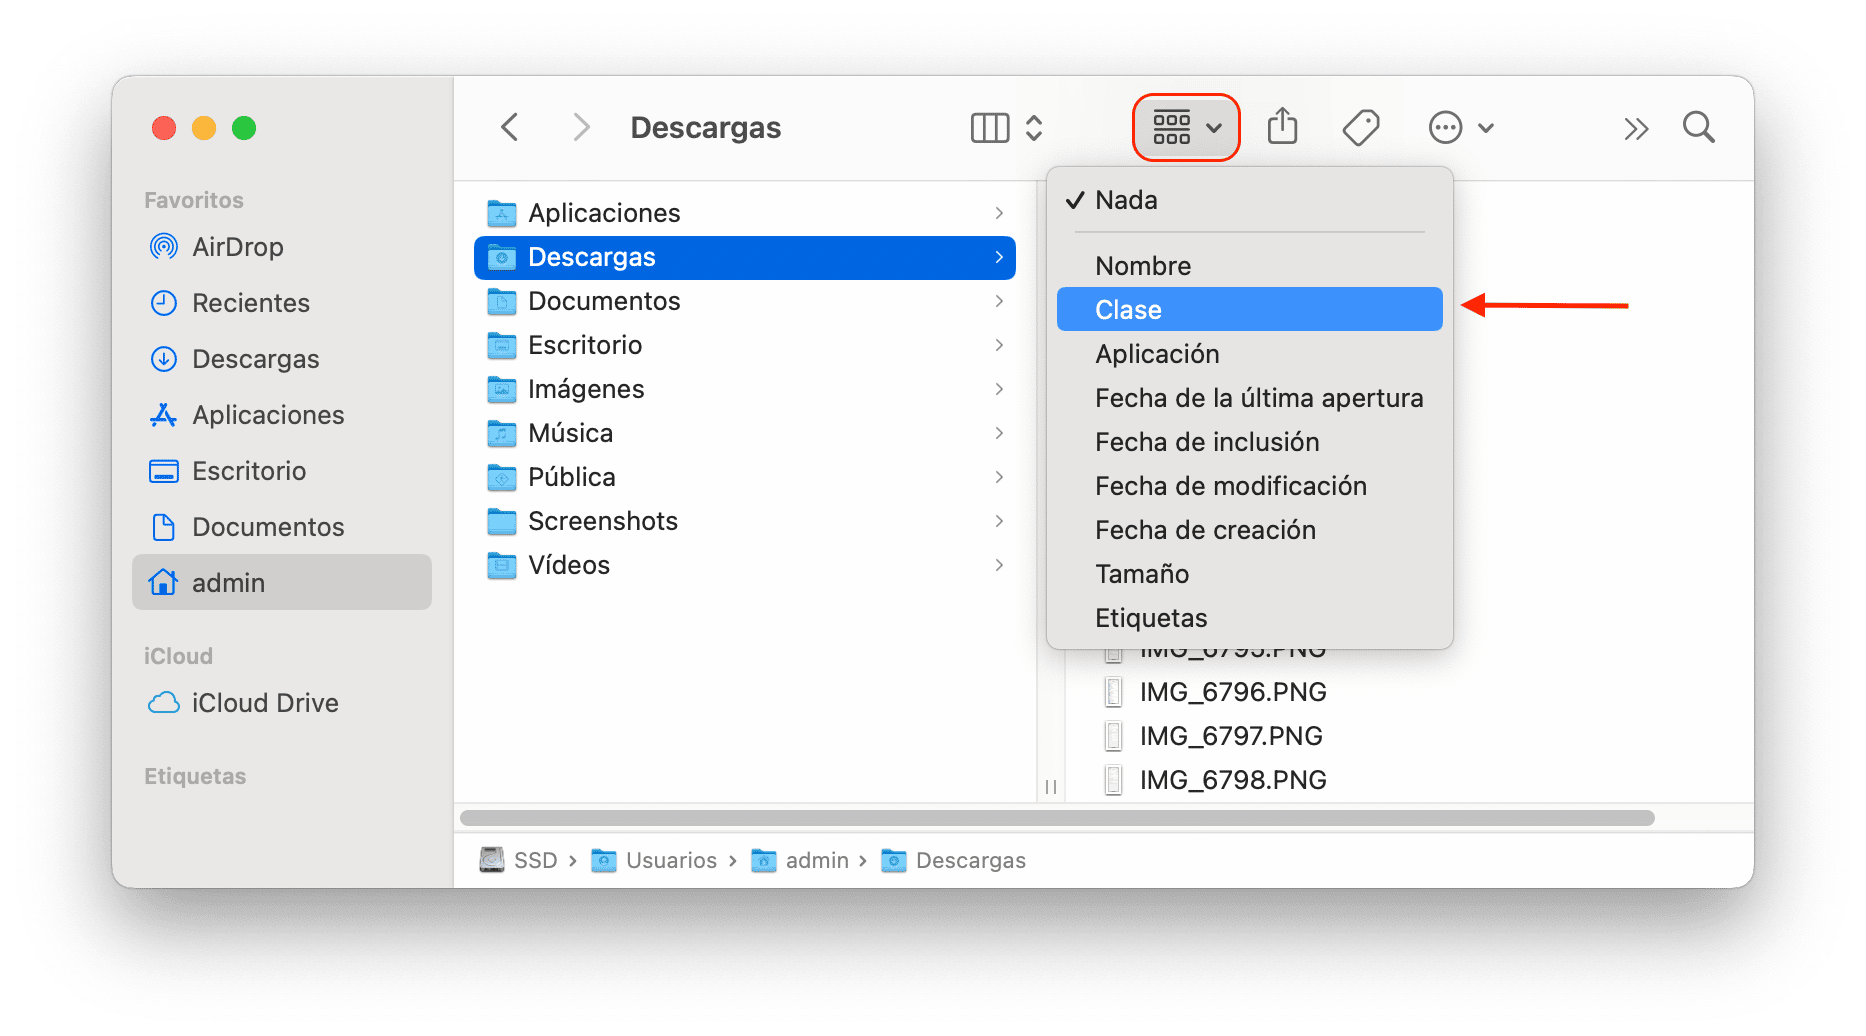 Sorting files in Downloads folder by kind